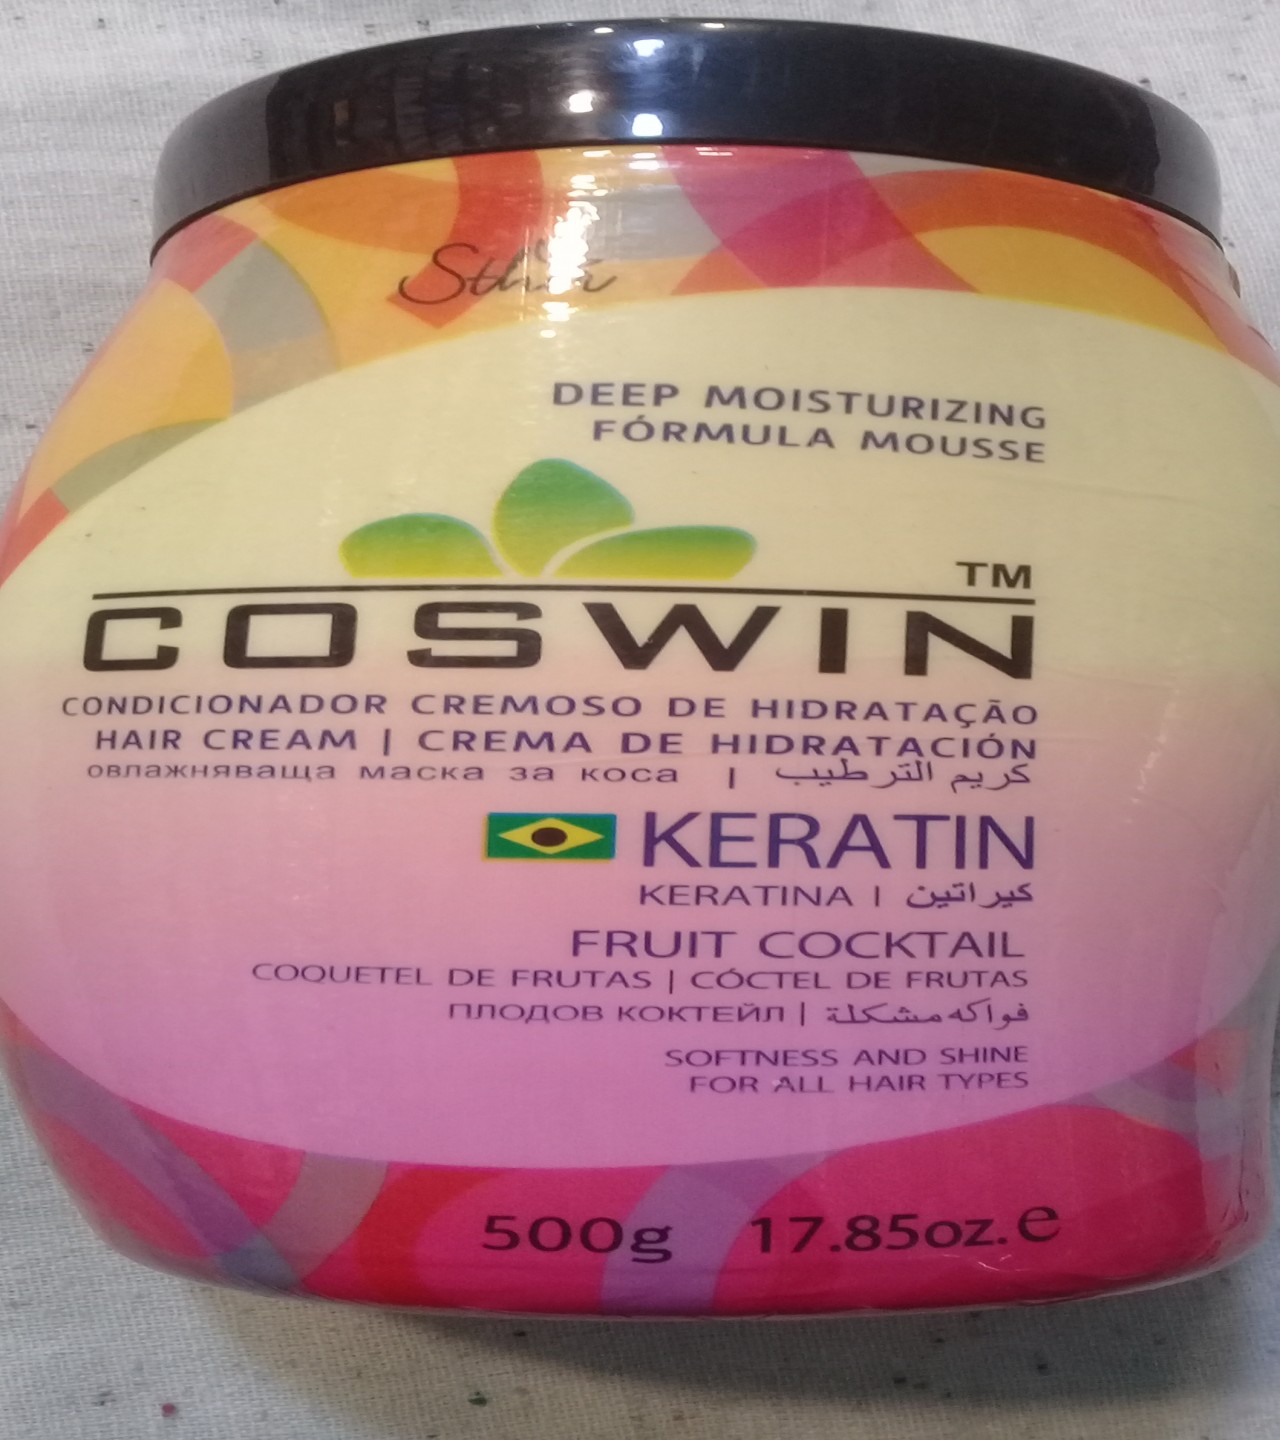 COSWIN HAIR CREAM & CONDITIONER KERATIN FRUIT COCKTAIL 500GM